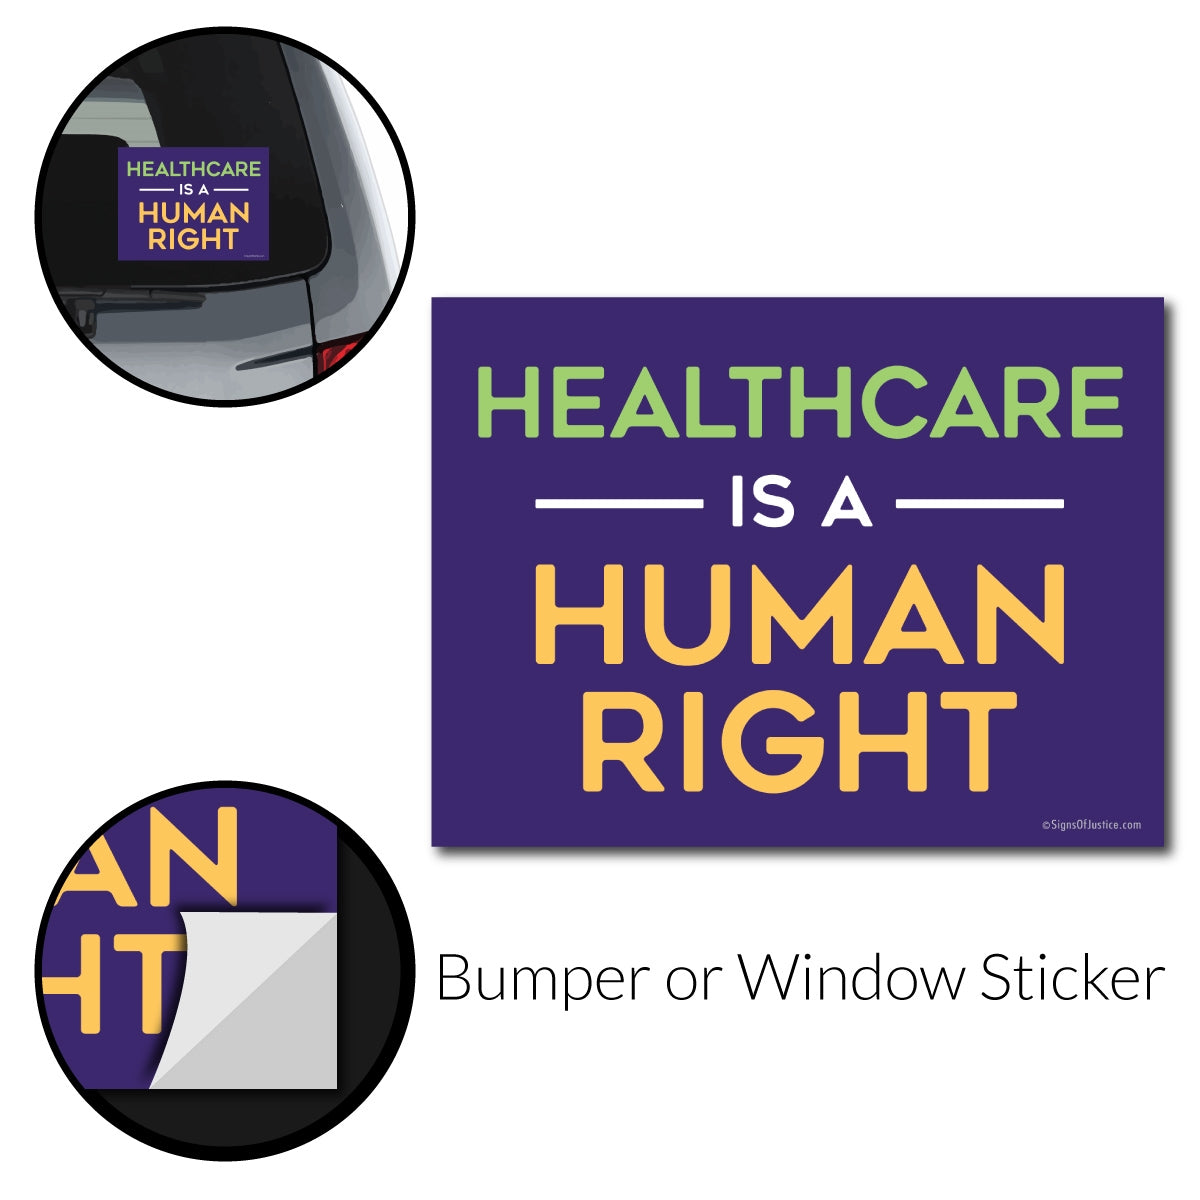 Healthcare Rights Bumper Sticker - Free Shipping!